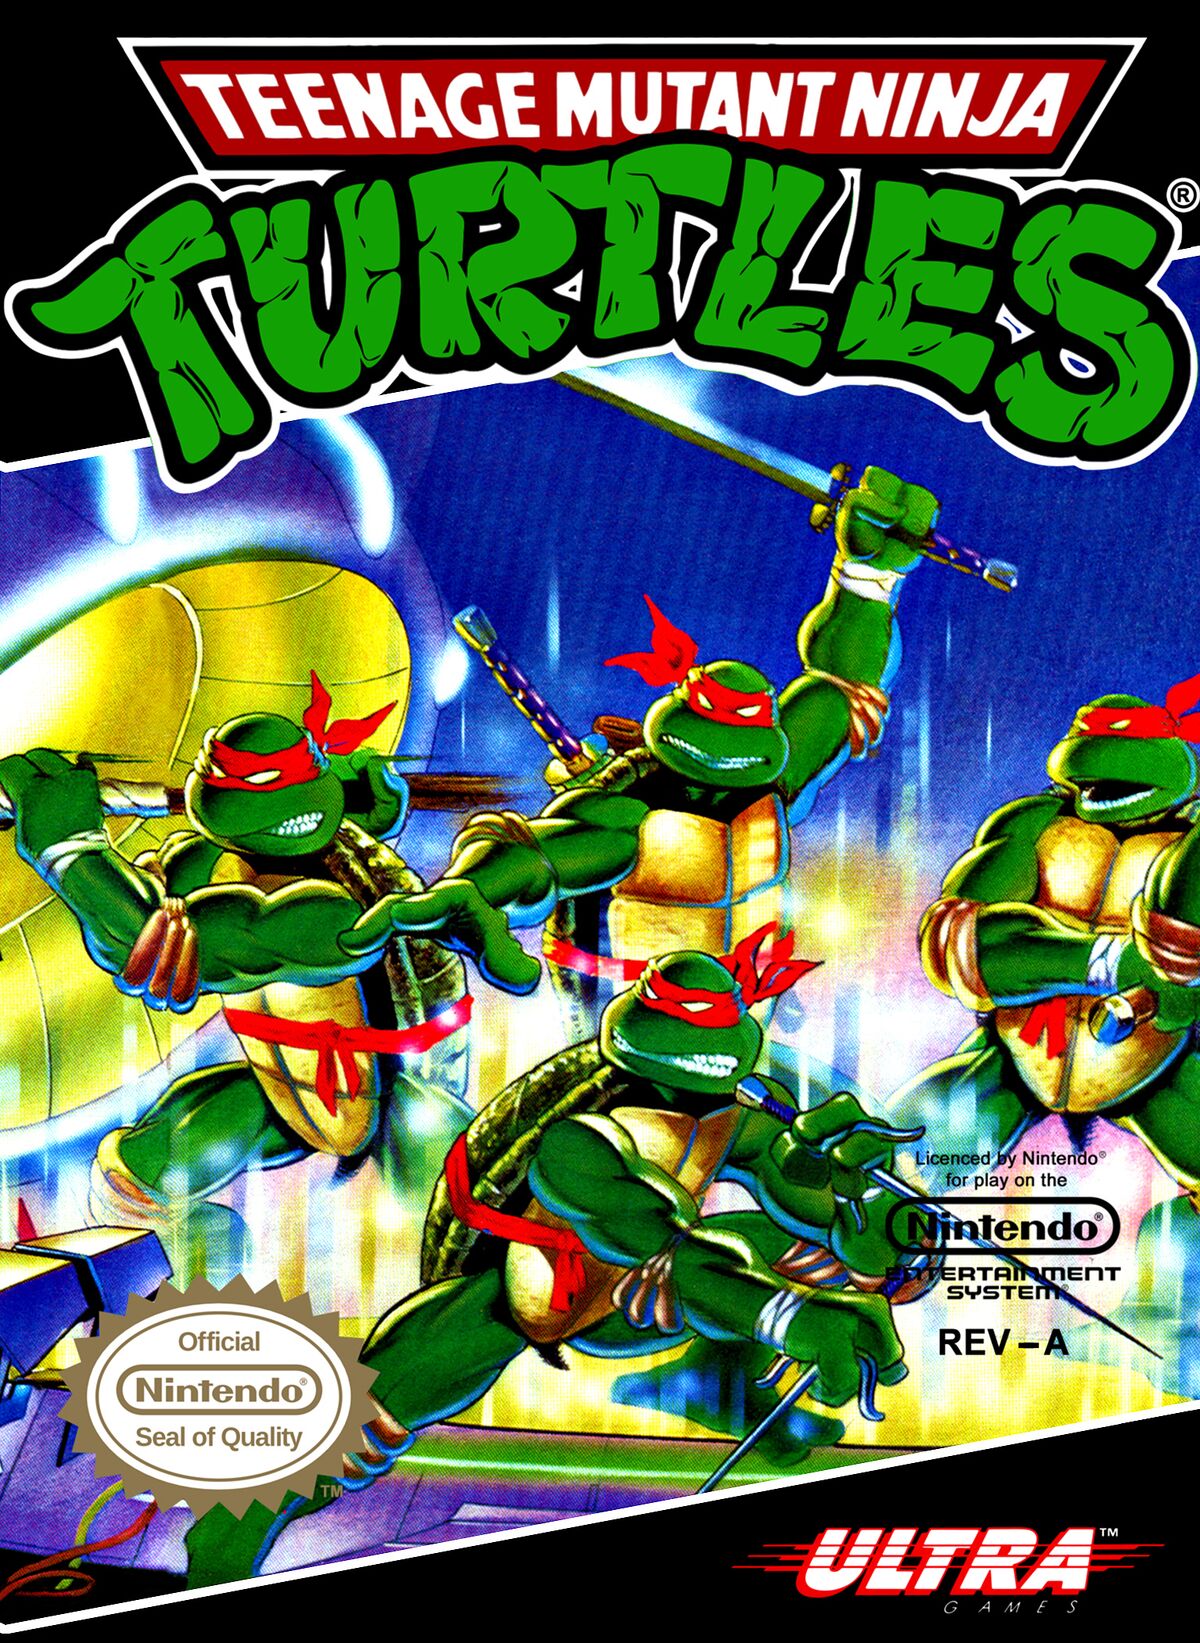 https://wiki.dolphin-emu.org/images/thumb/b/b4/Teenage_Mutant_Ninja_Turtles_%28NES%29.jpg/1200px-Teenage_Mutant_Ninja_Turtles_%28NES%29.jpg